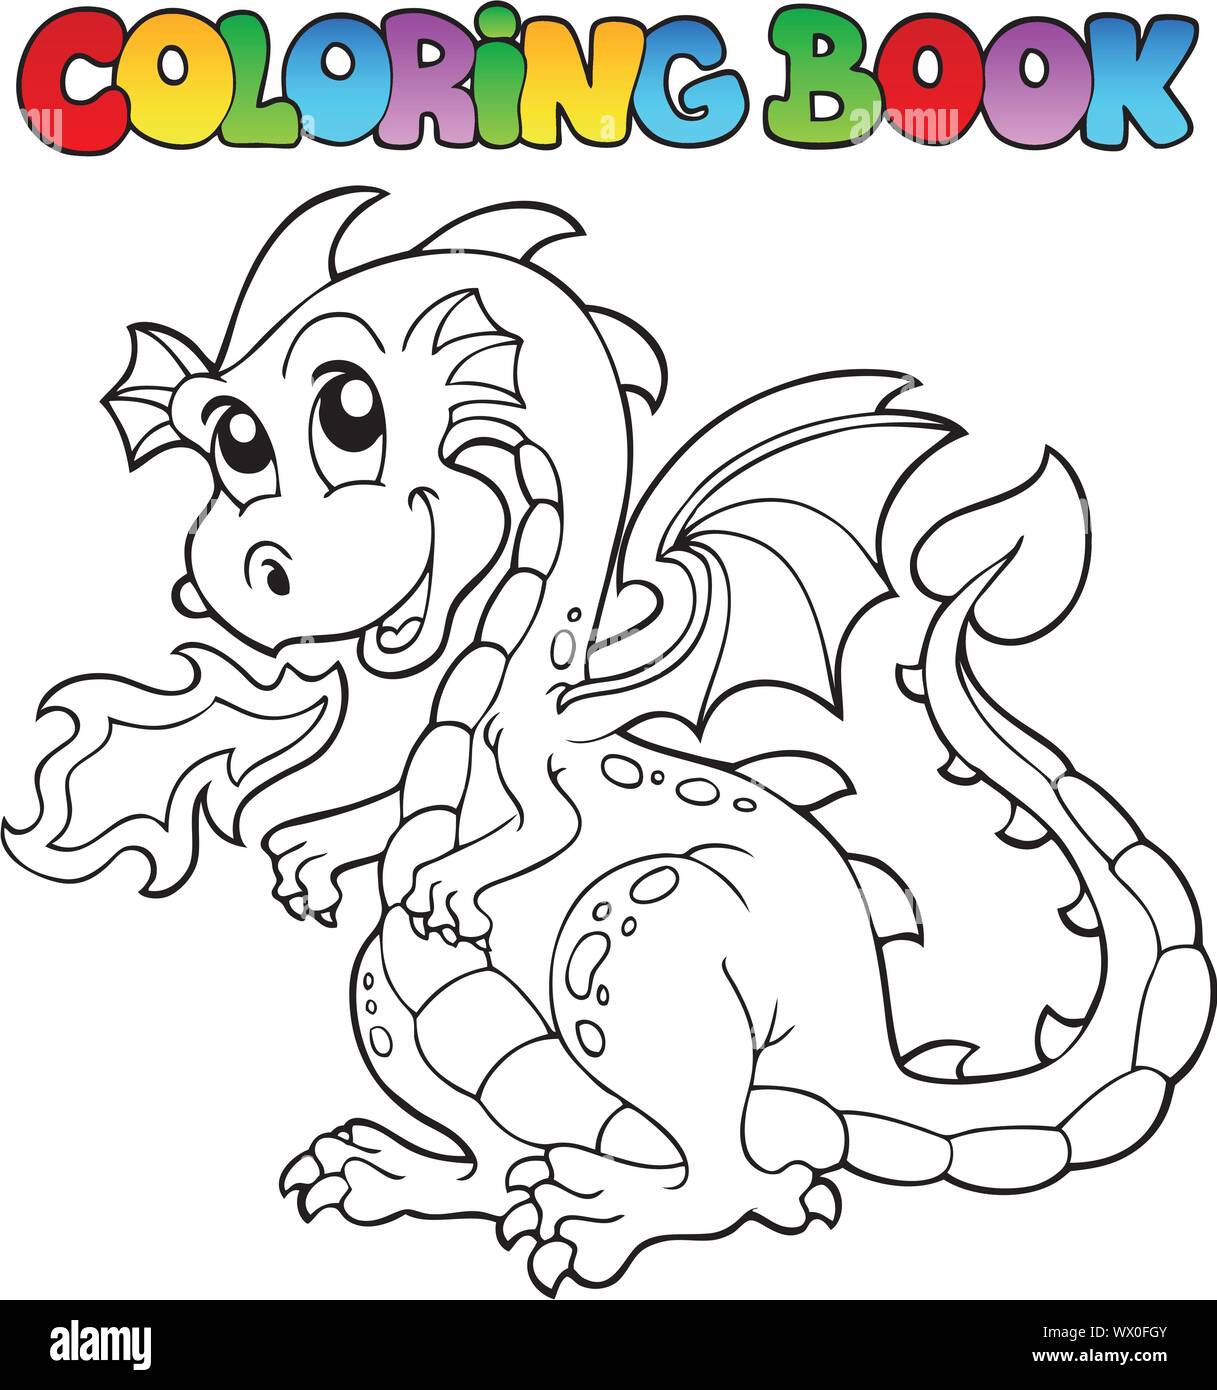 Coloring book dragon theme image 2 Stock Vector Image & Art - Alamy